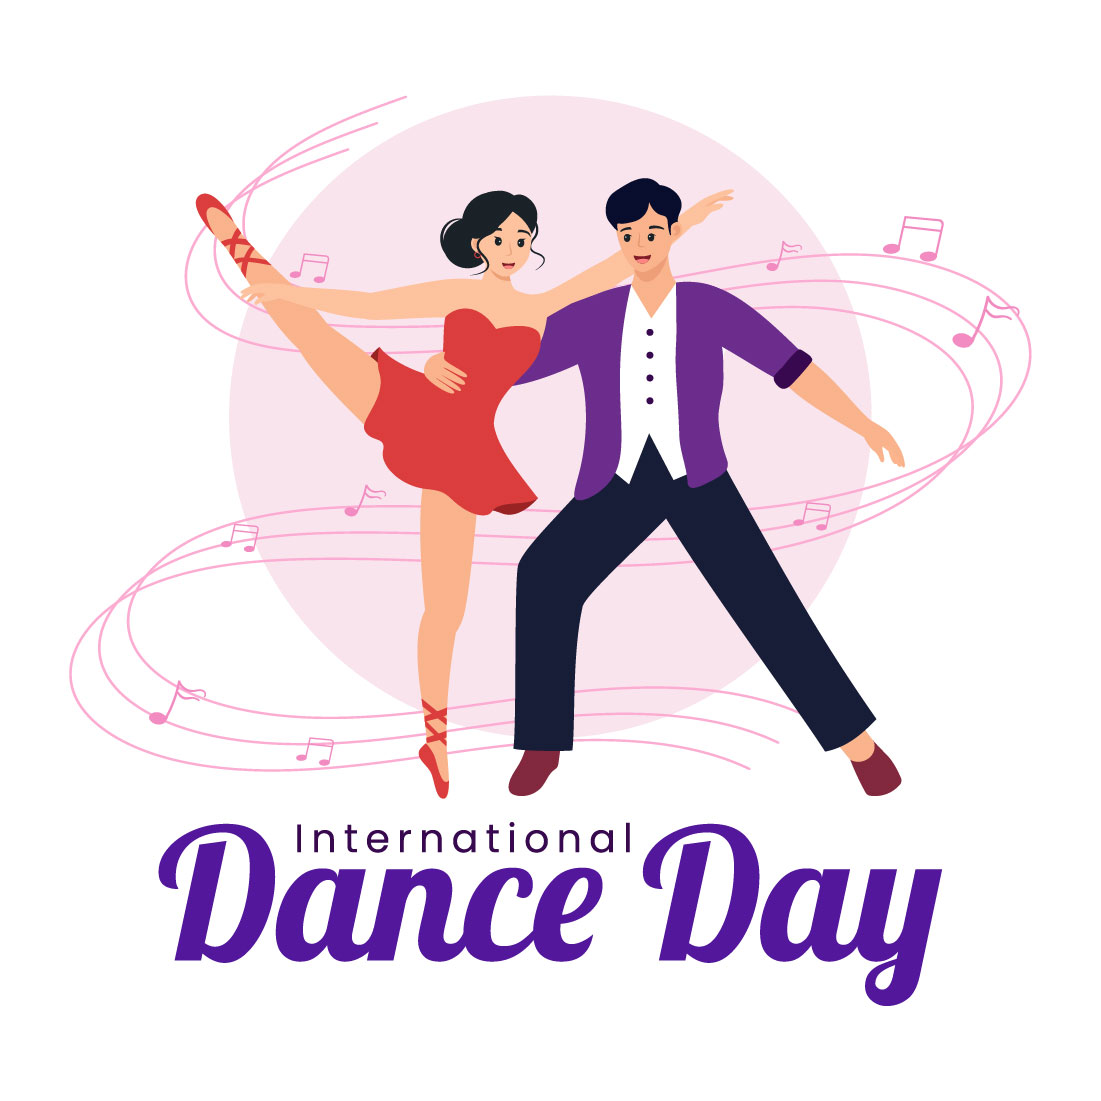 12 International Dance Day Illustration cover image.